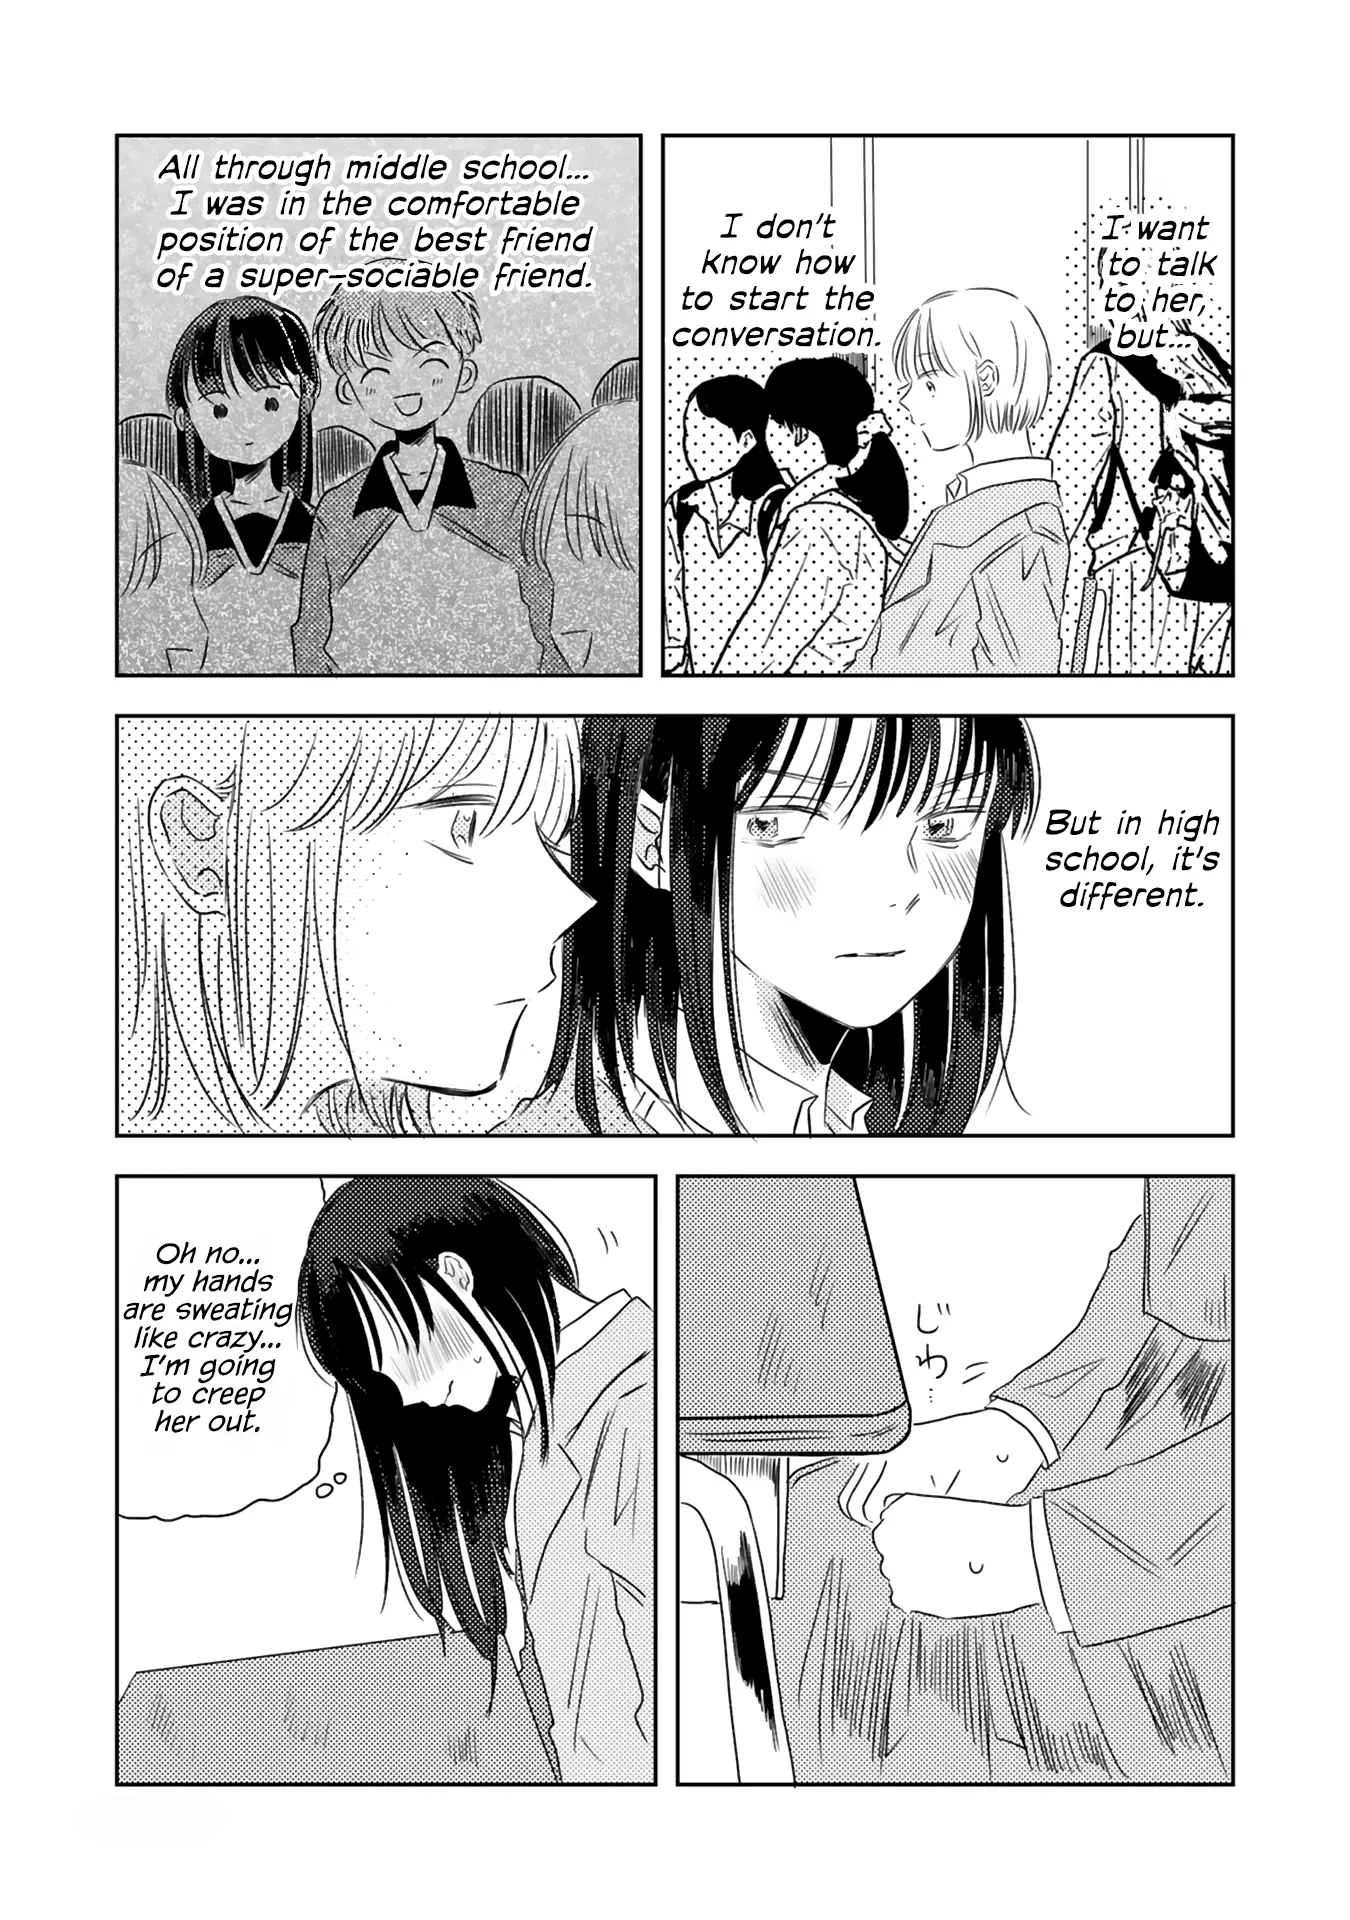 Futsuu No Koitte Nani? - 4 page 4-43cf037b